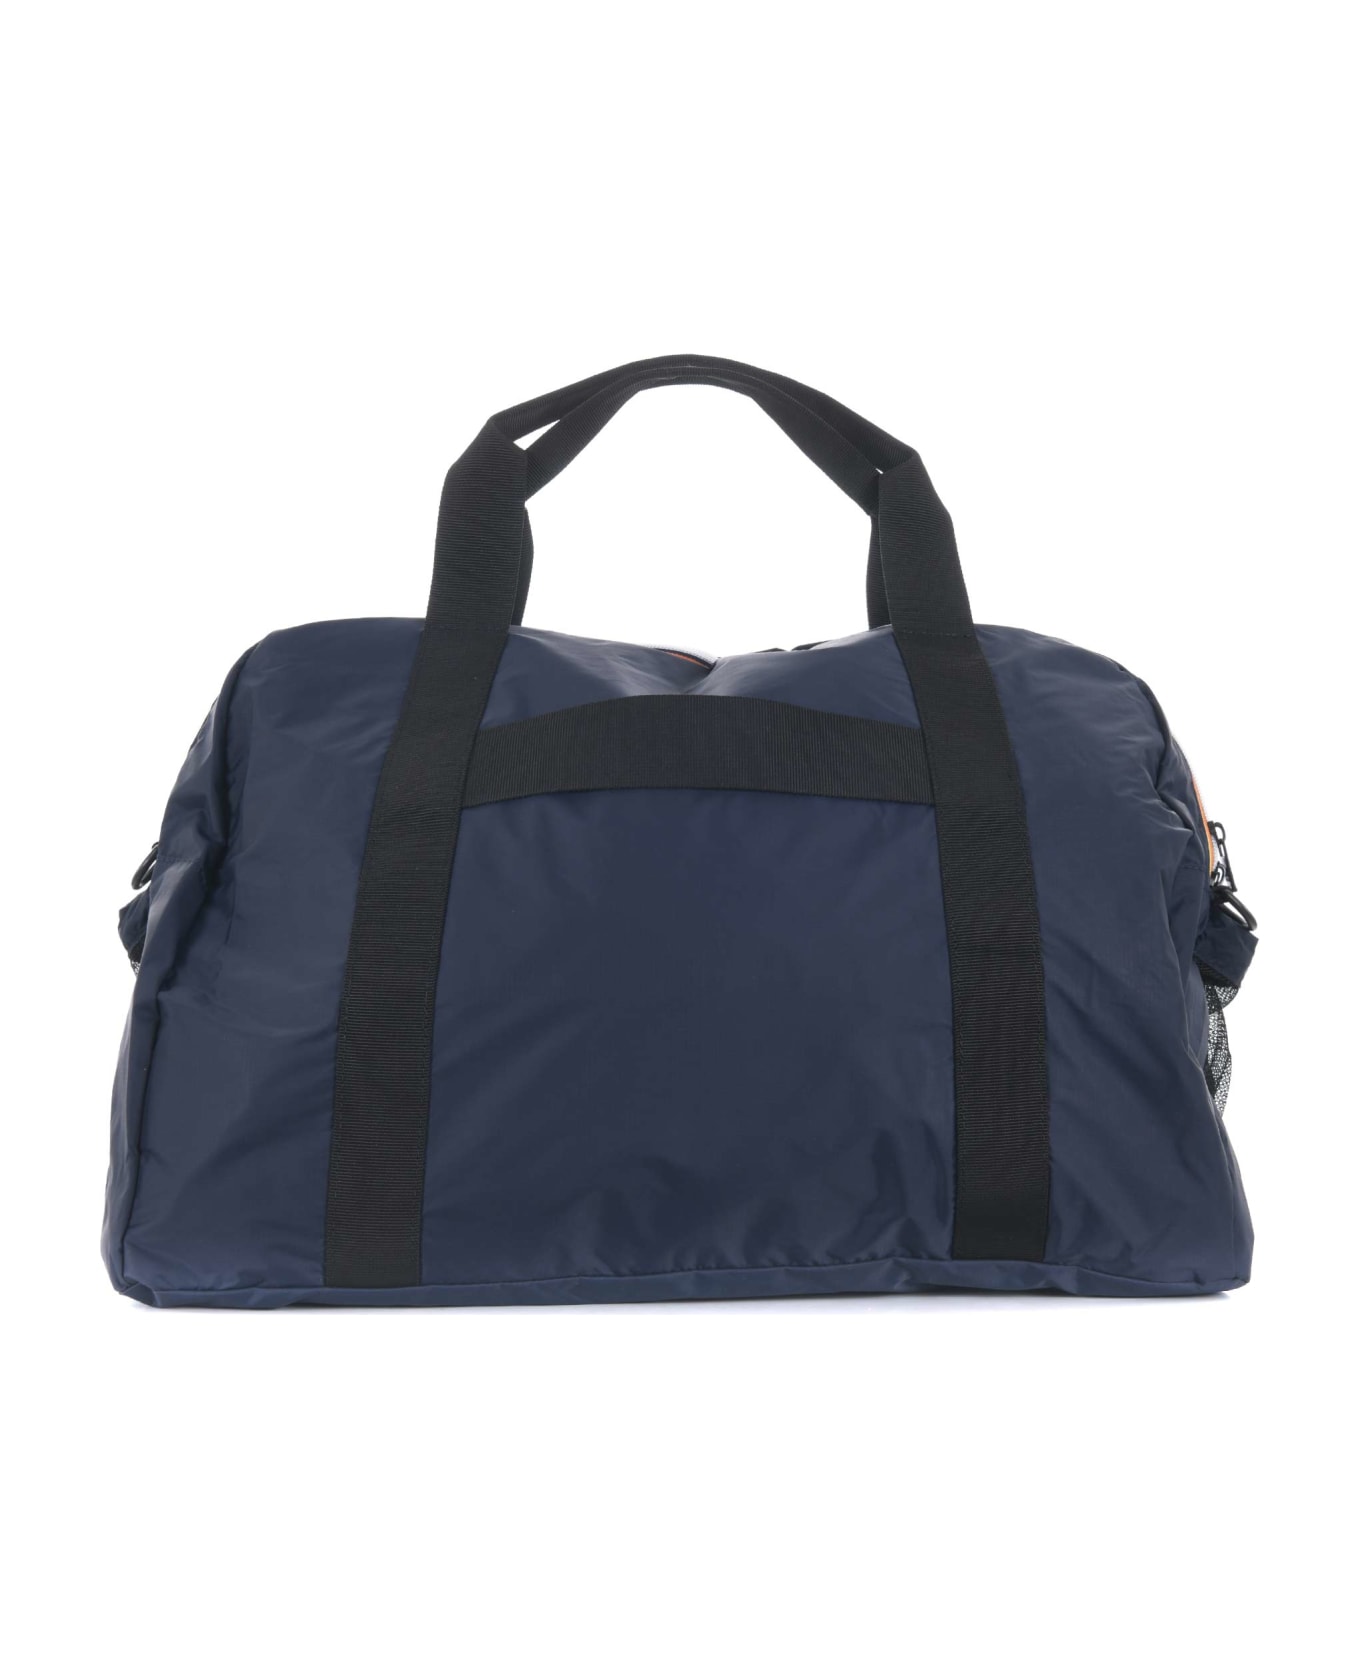 K-Way Duffle Bag - Blu scuro トラベルバッグ